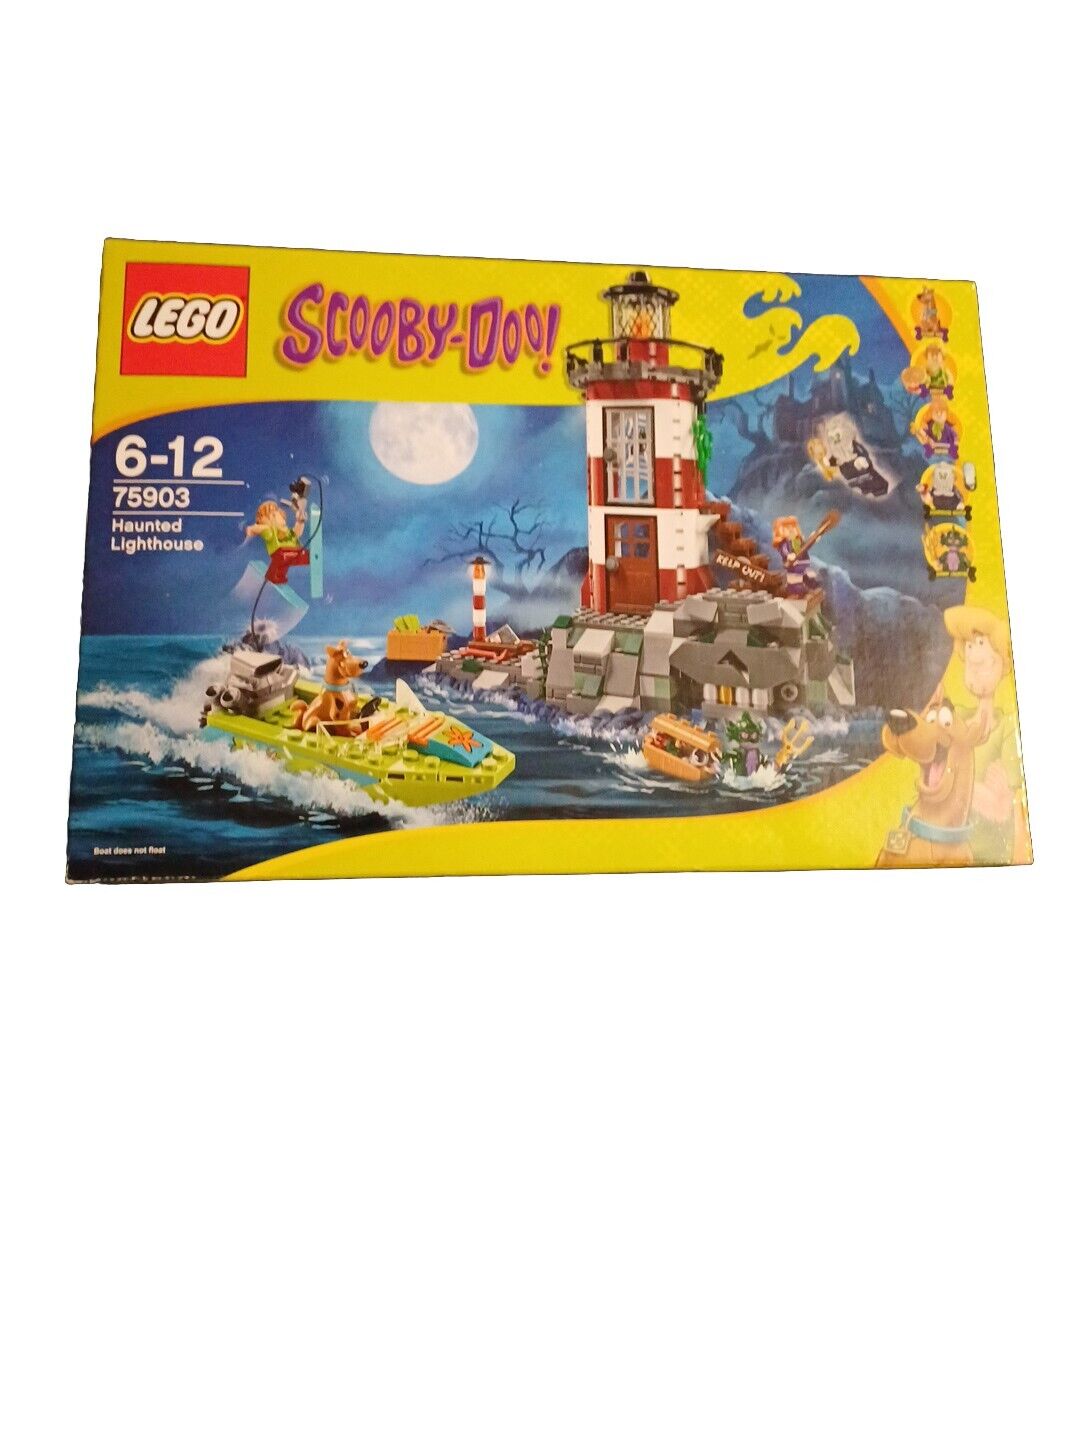 LEGO Scooby Doo - 75903 - Haunted Lighthouse *BNISB* NEW